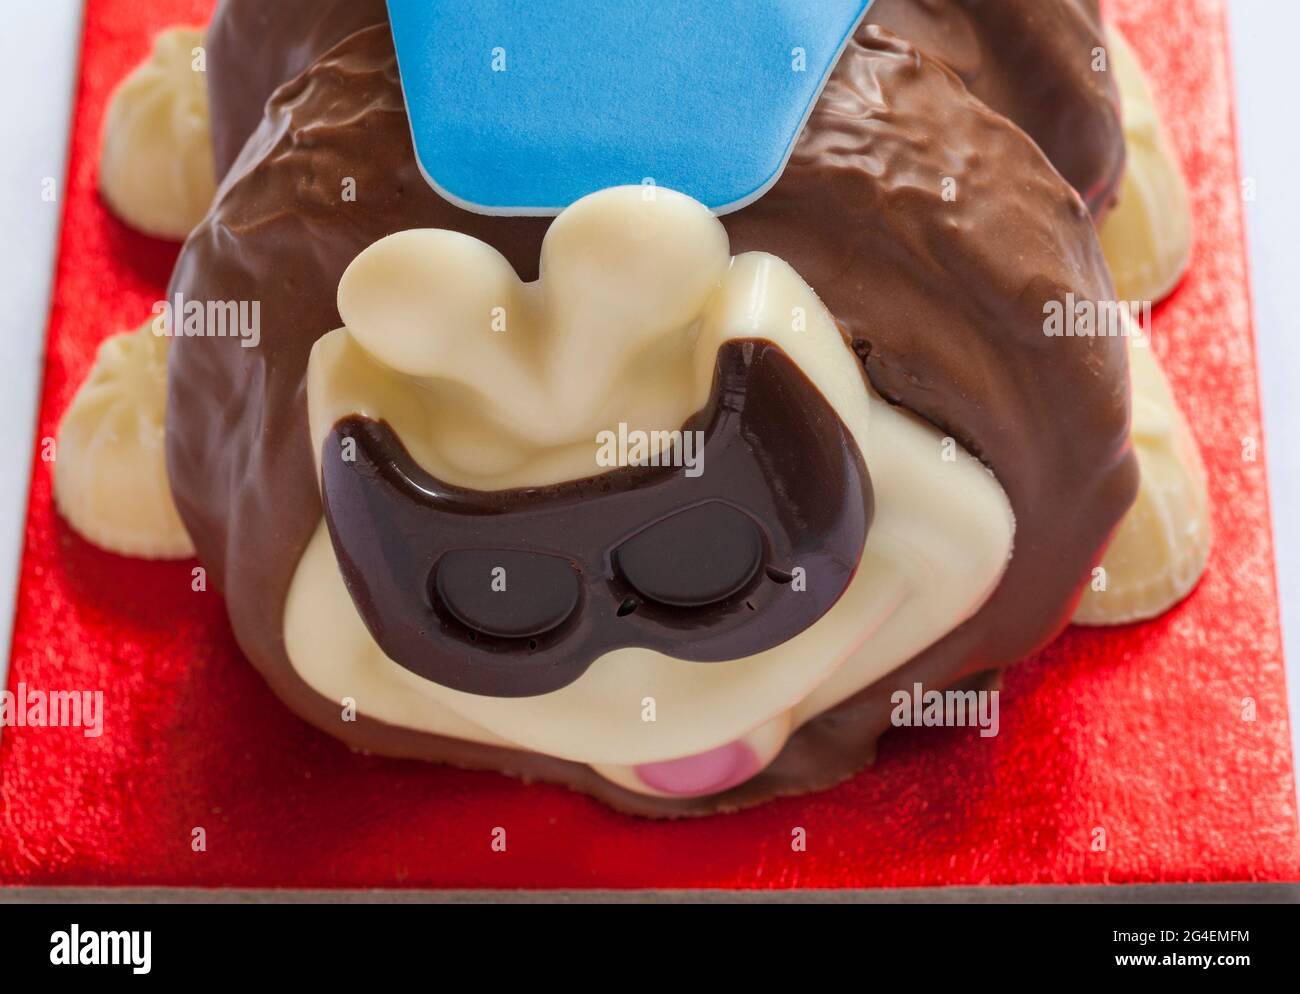 30 adornos comestibles para cupcakes – Hulk Hero Logo Party Collection de  decoraciones comestibles para tartas | Hoja de oblea comestible